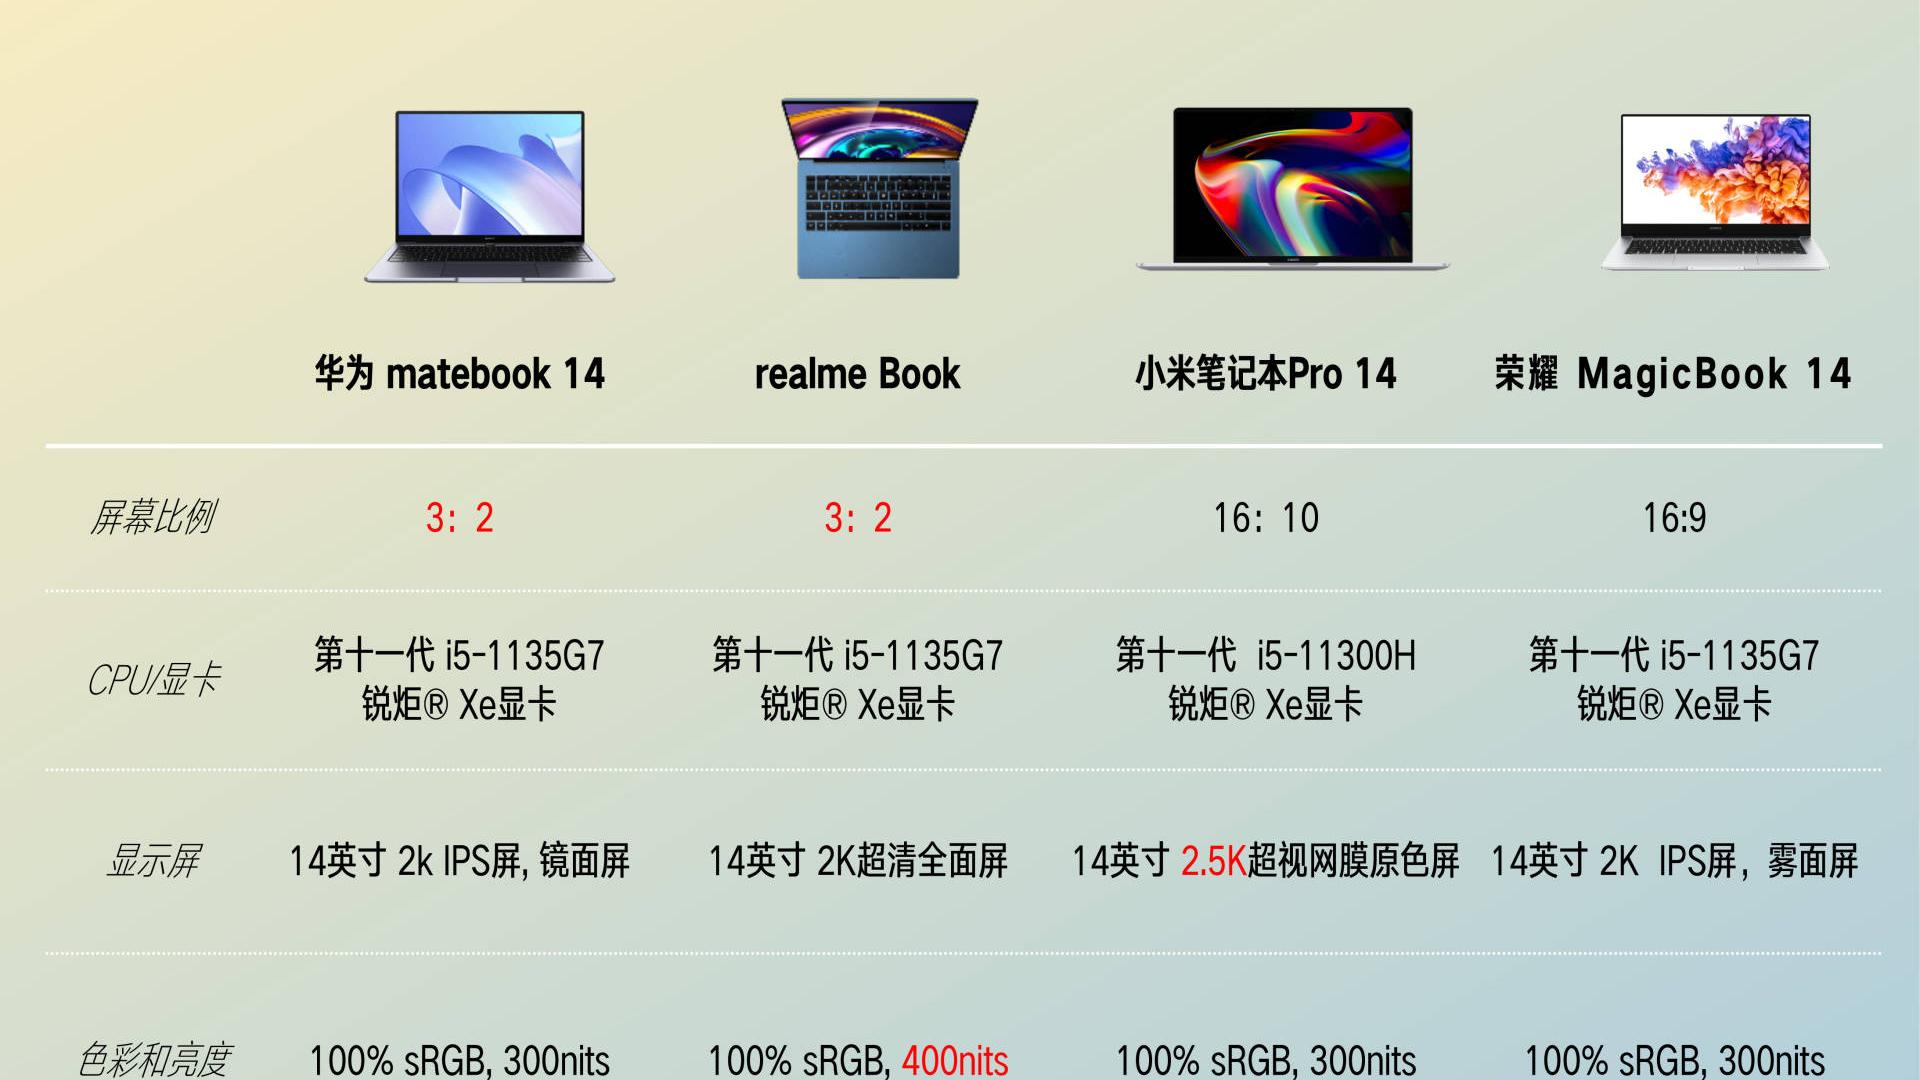 realme|同样是手机厂商出品的笔记本，为什么说realme Book性价比更高？